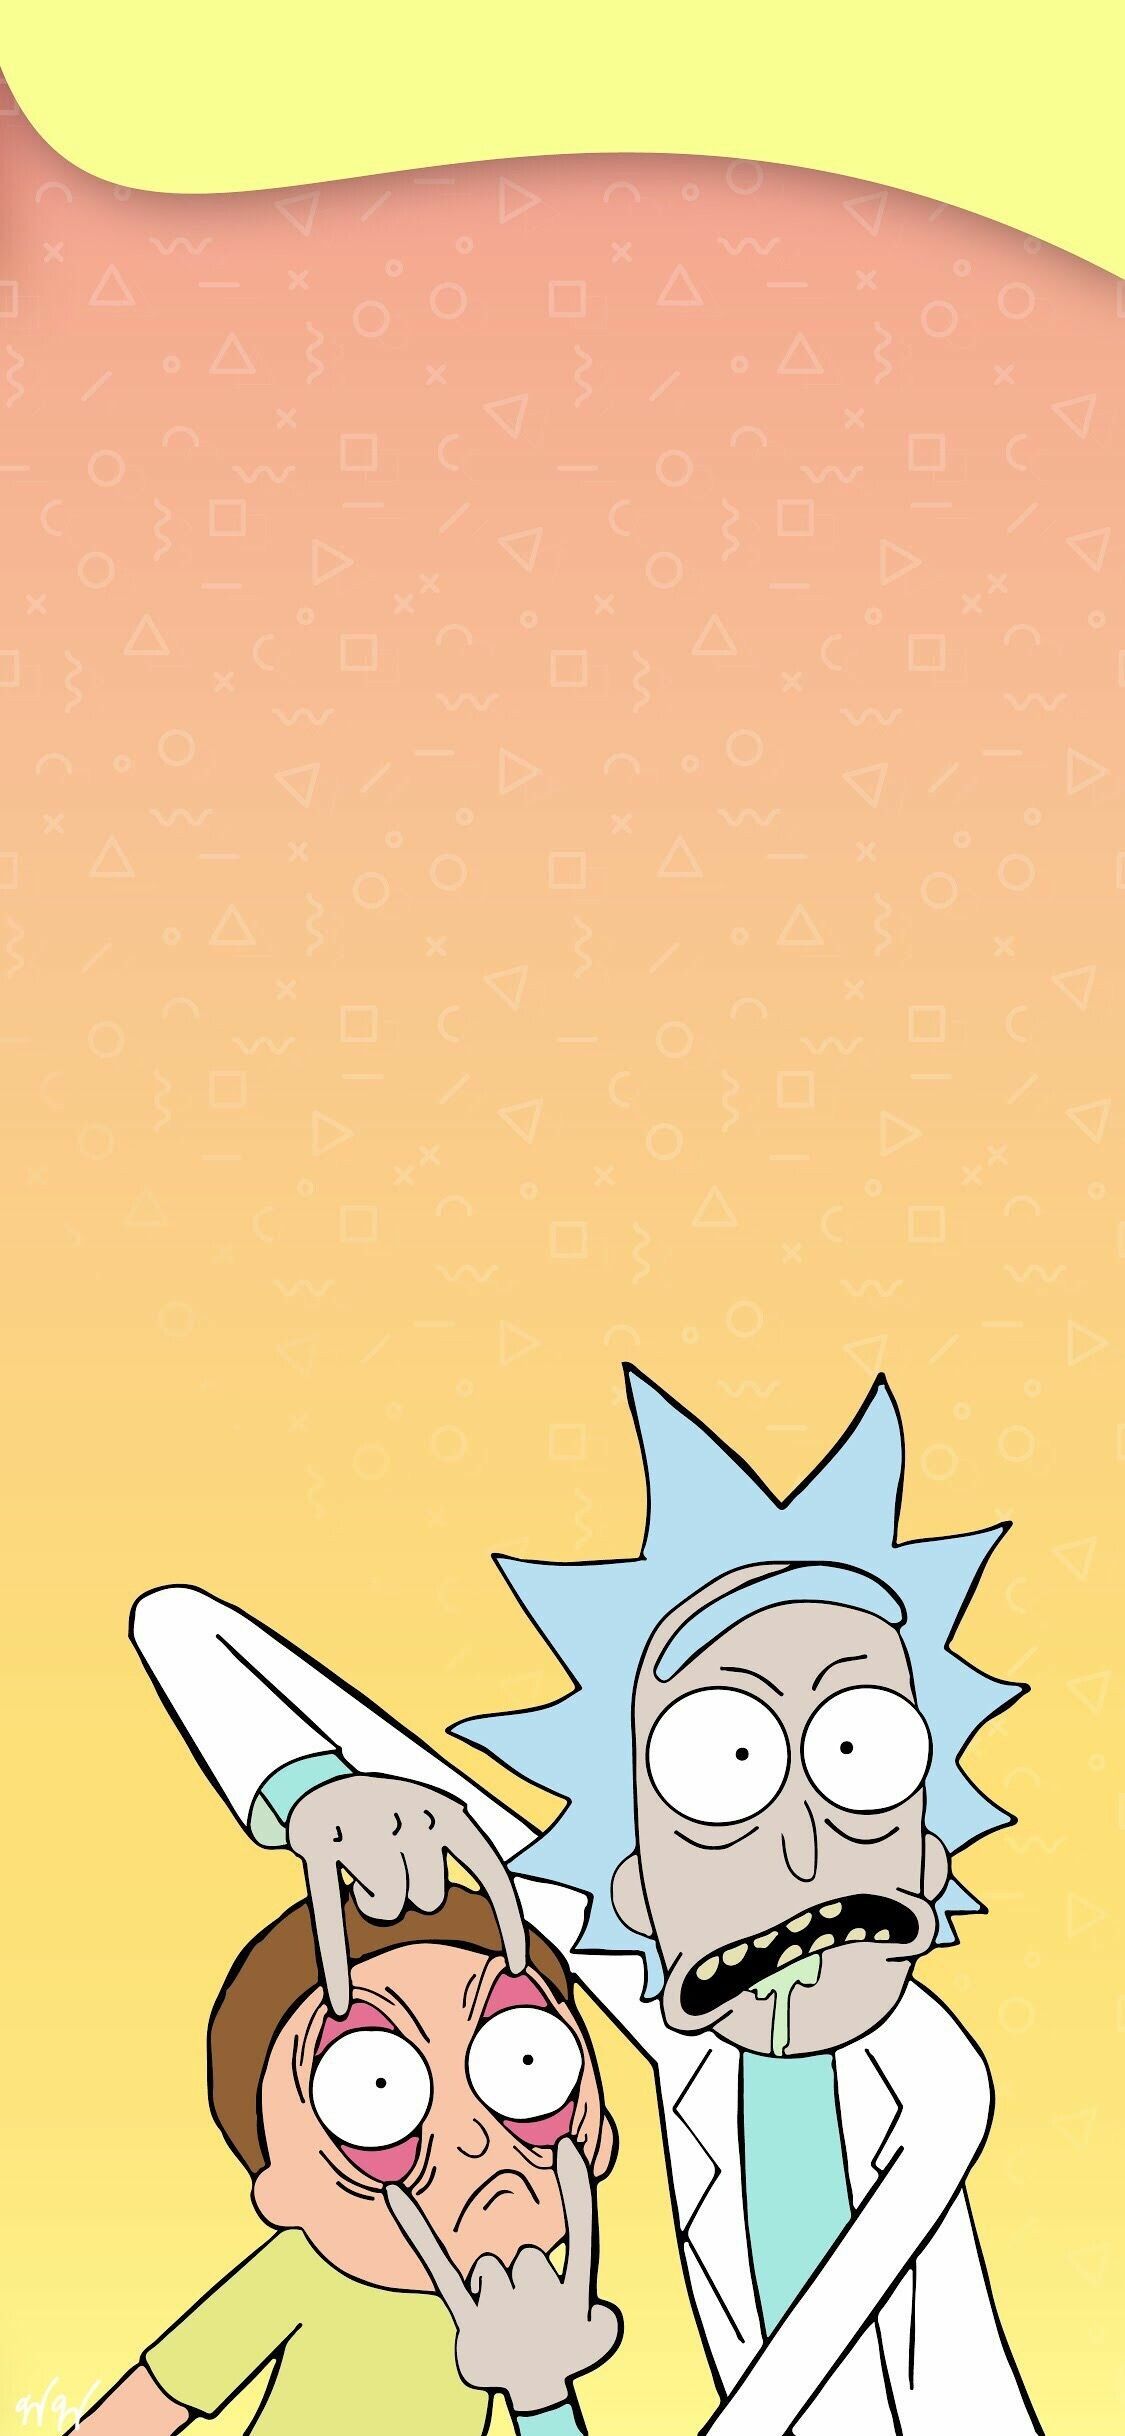 Rick and Morty Wallpaper image